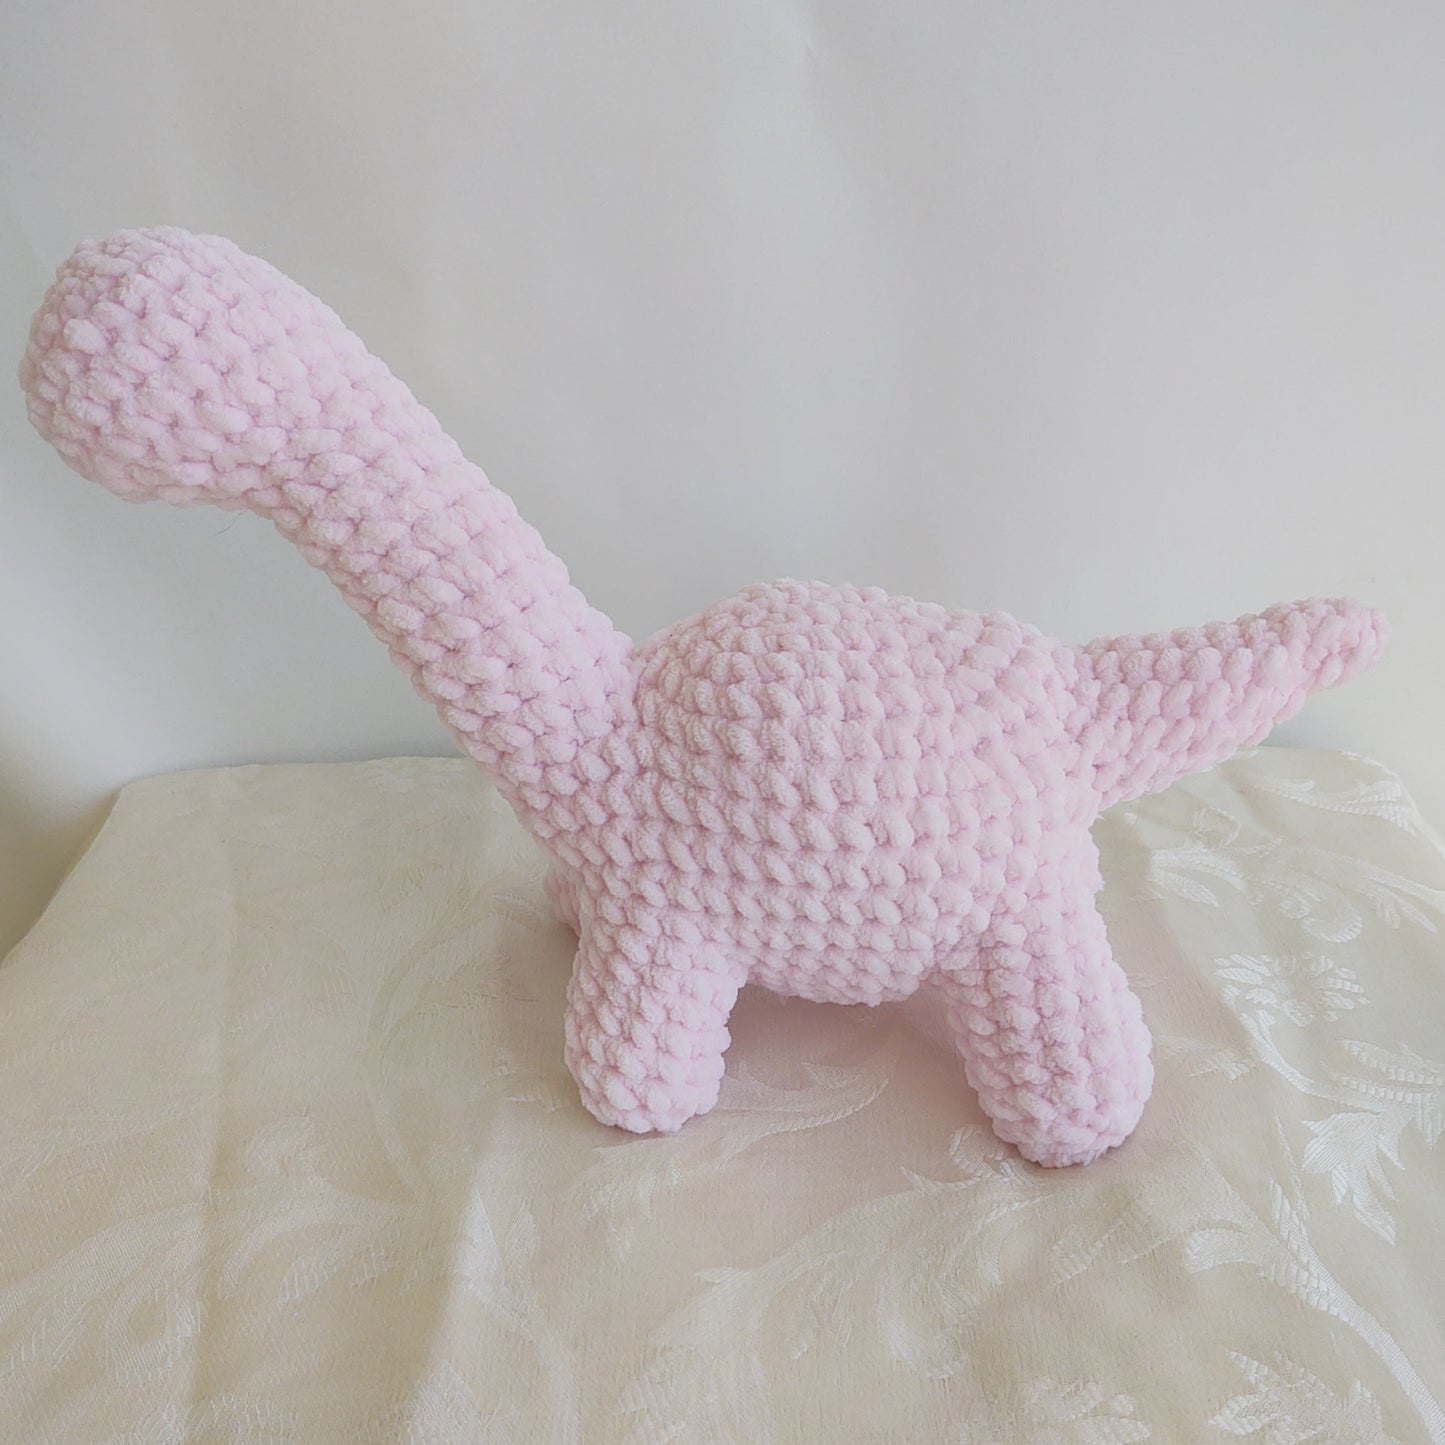 Crochet Plush Stuffed Brontosaurus